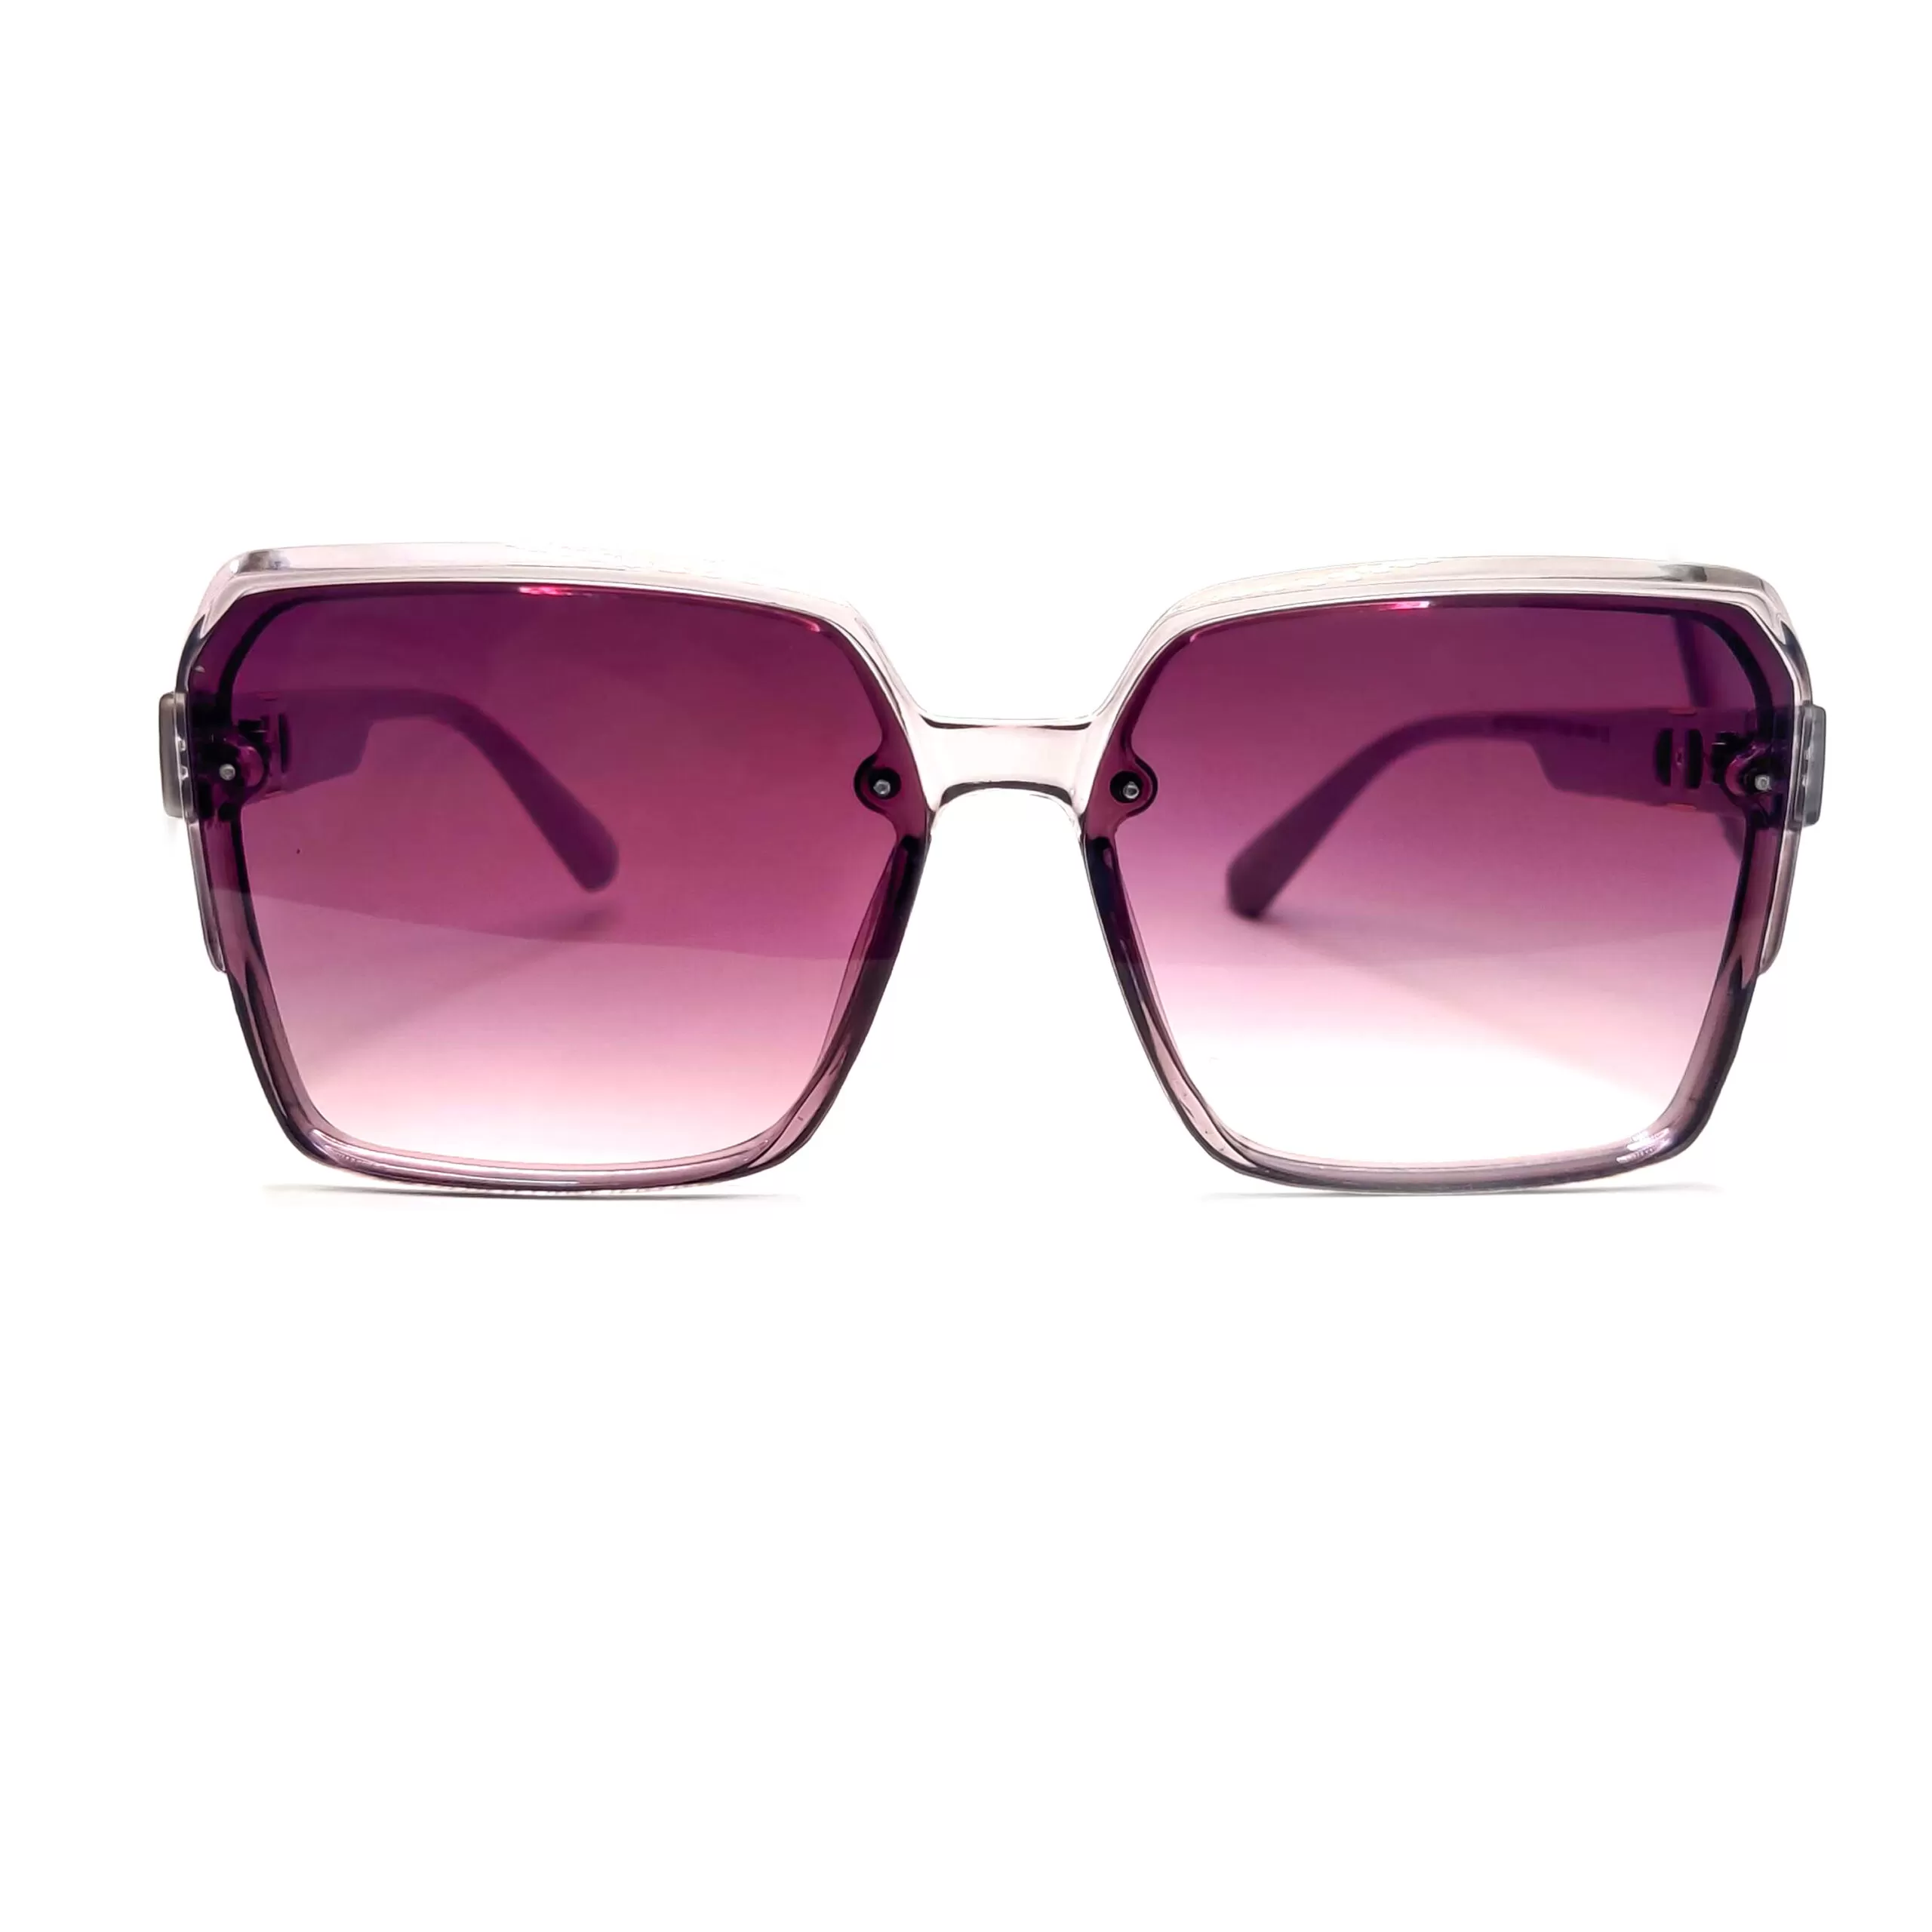 Buy sunglasses online at chashmah.com